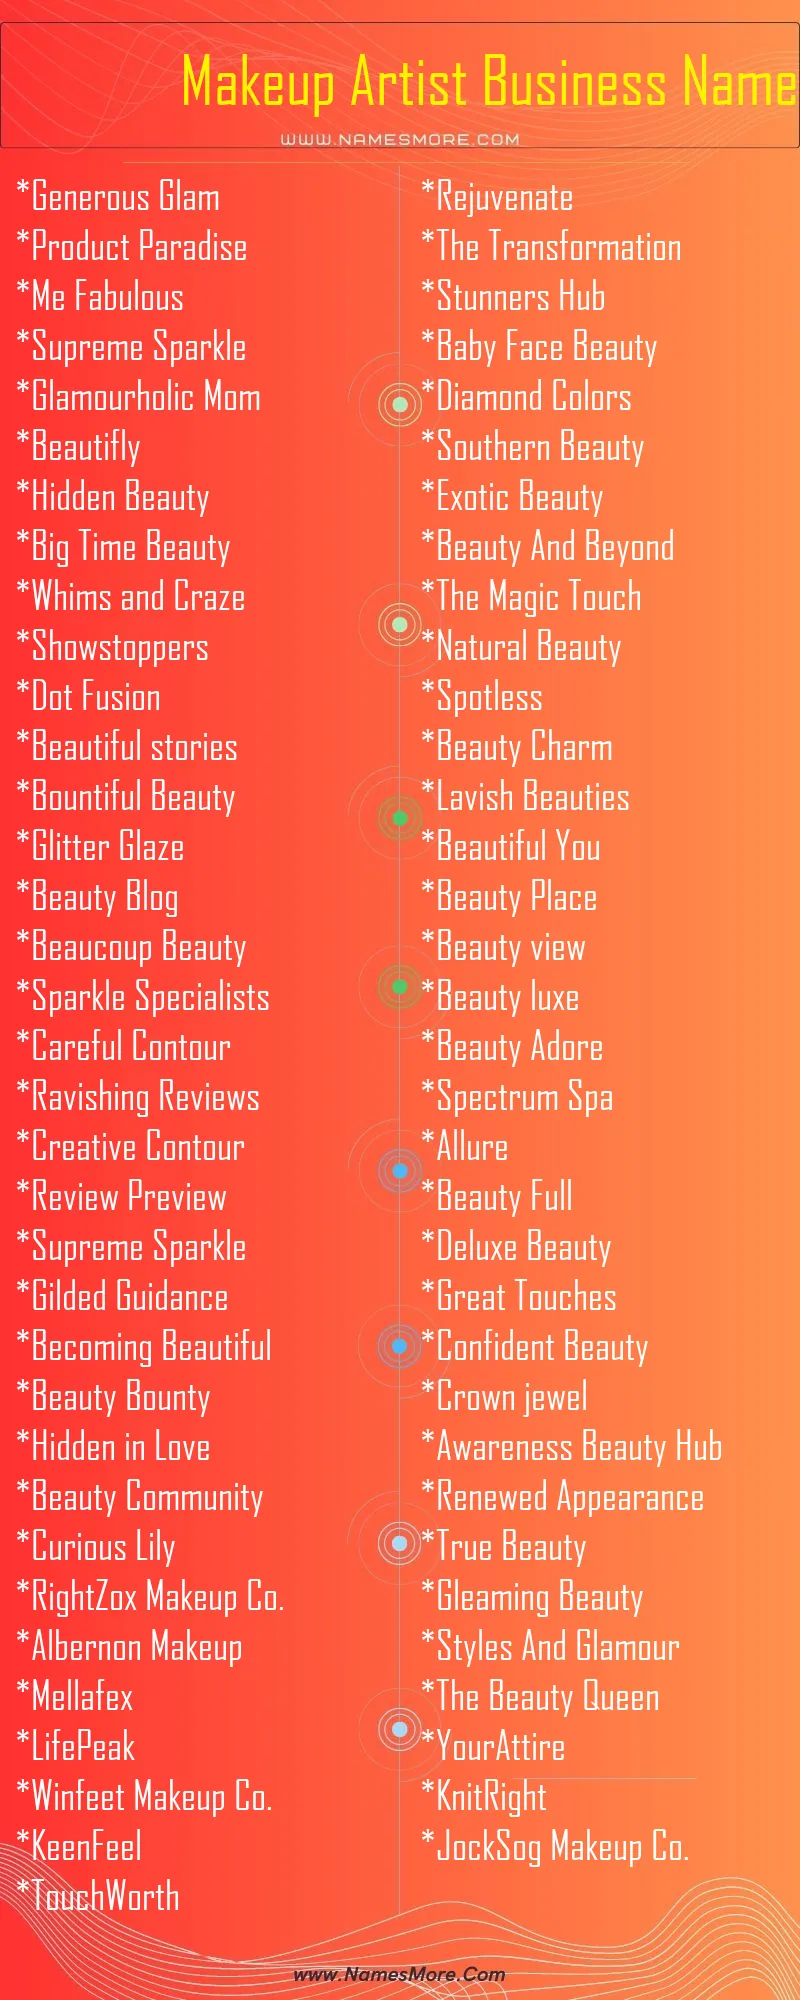 Makeup Artist Business Names List Infographic